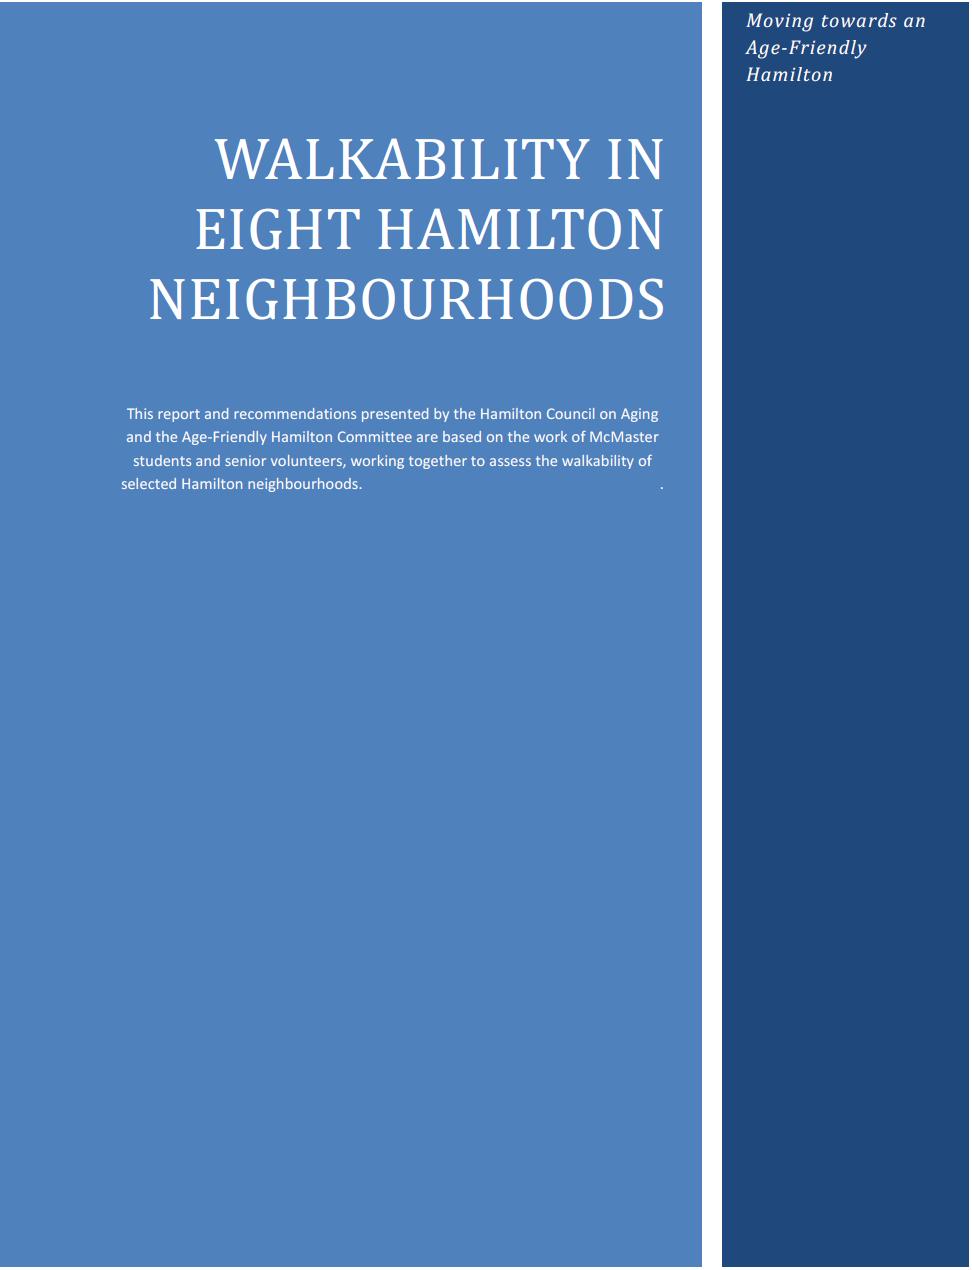 Neighbourhood Walkability 2011 HCoA Report: Walkability in